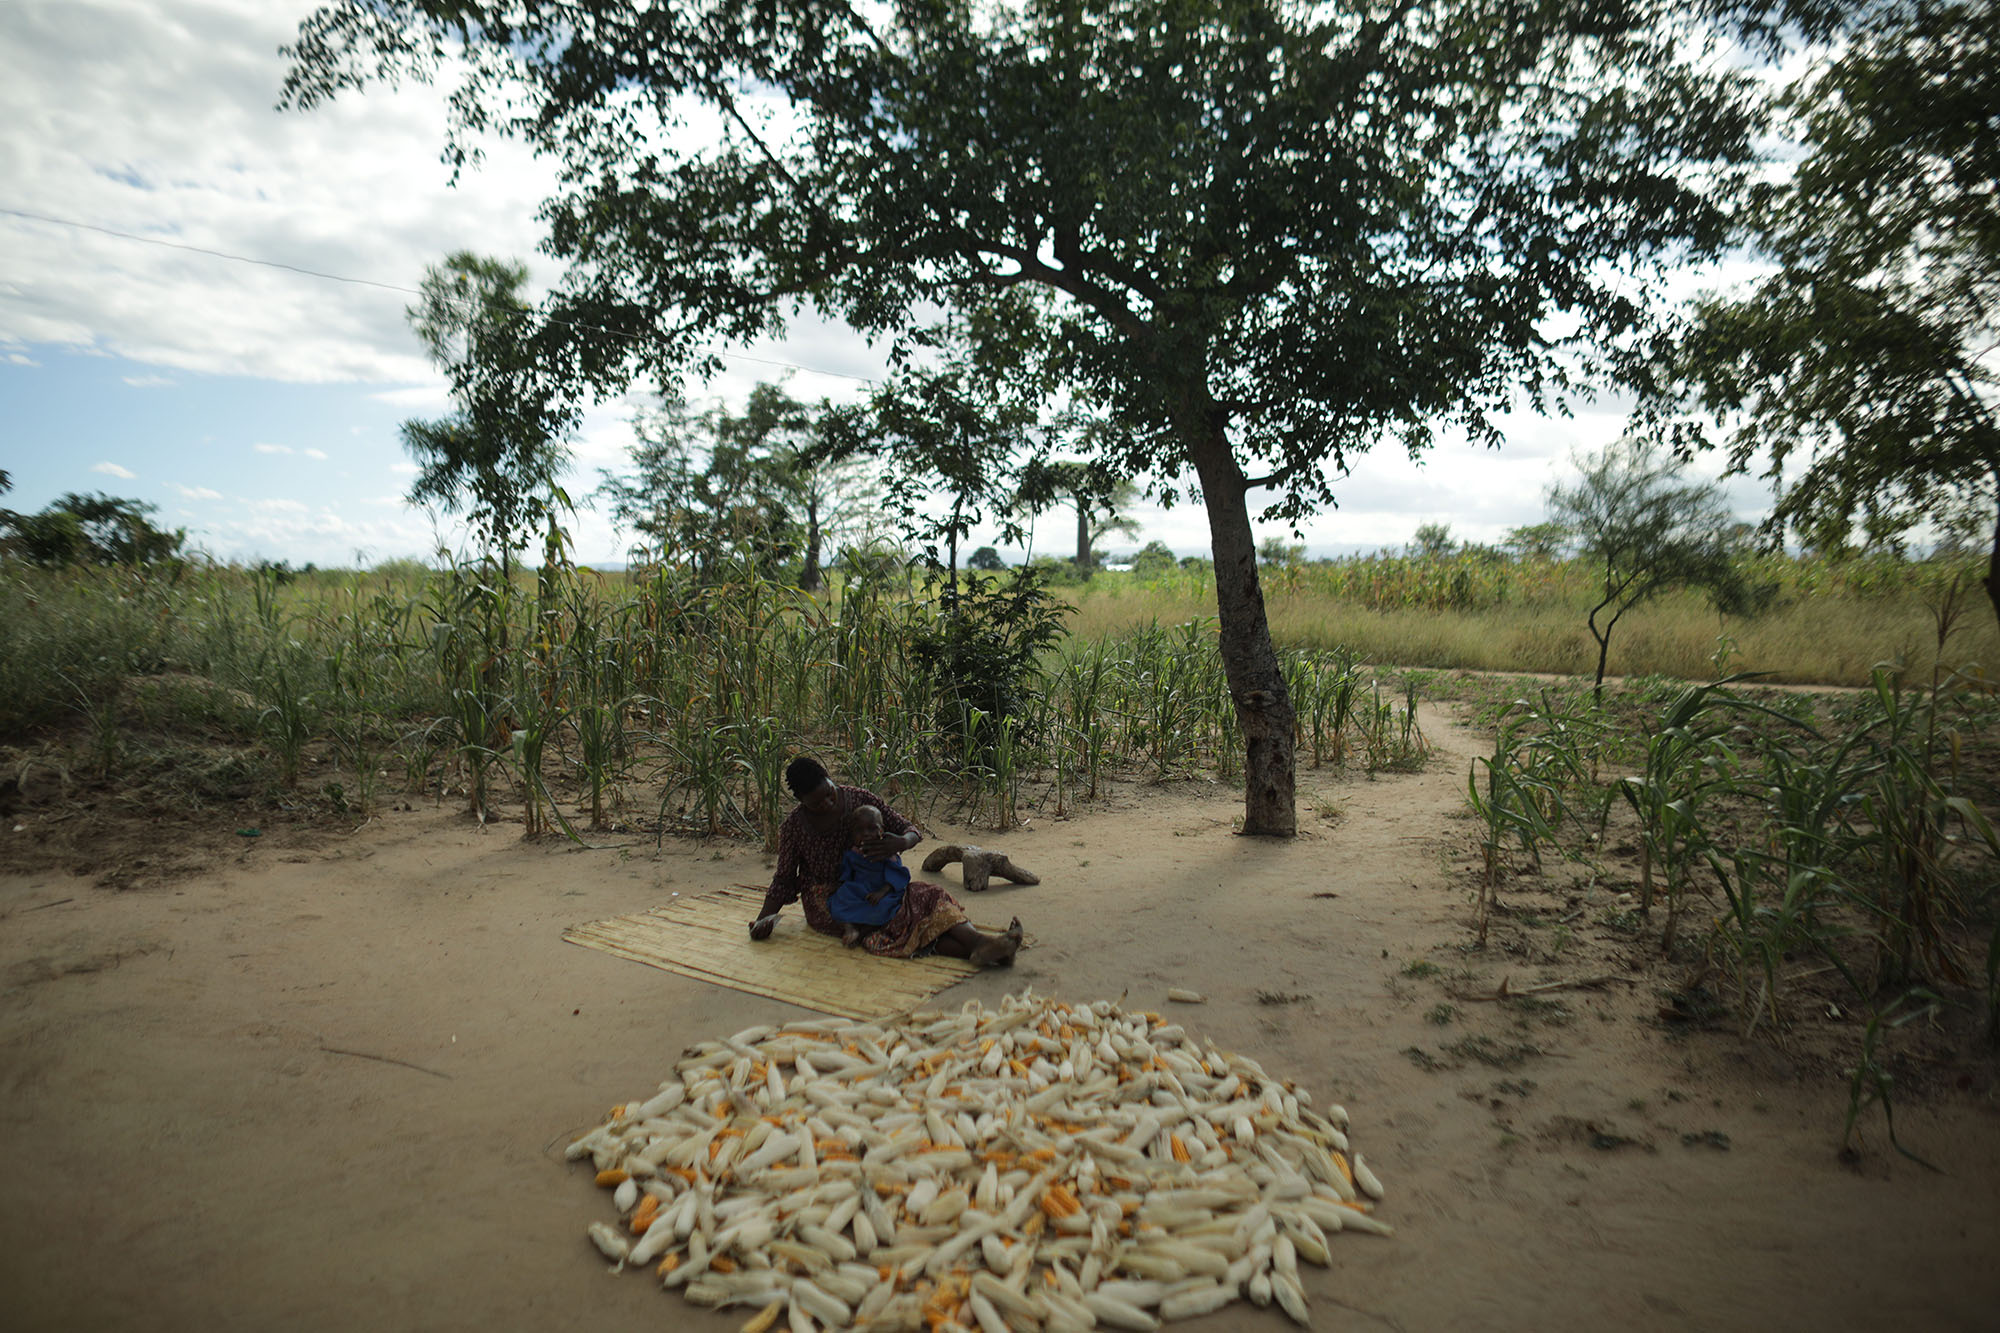  &nbsp;Mariam Chinguwo feeds plump nut to her daughter, Maness. Photo by Josh Estey.&nbsp; 